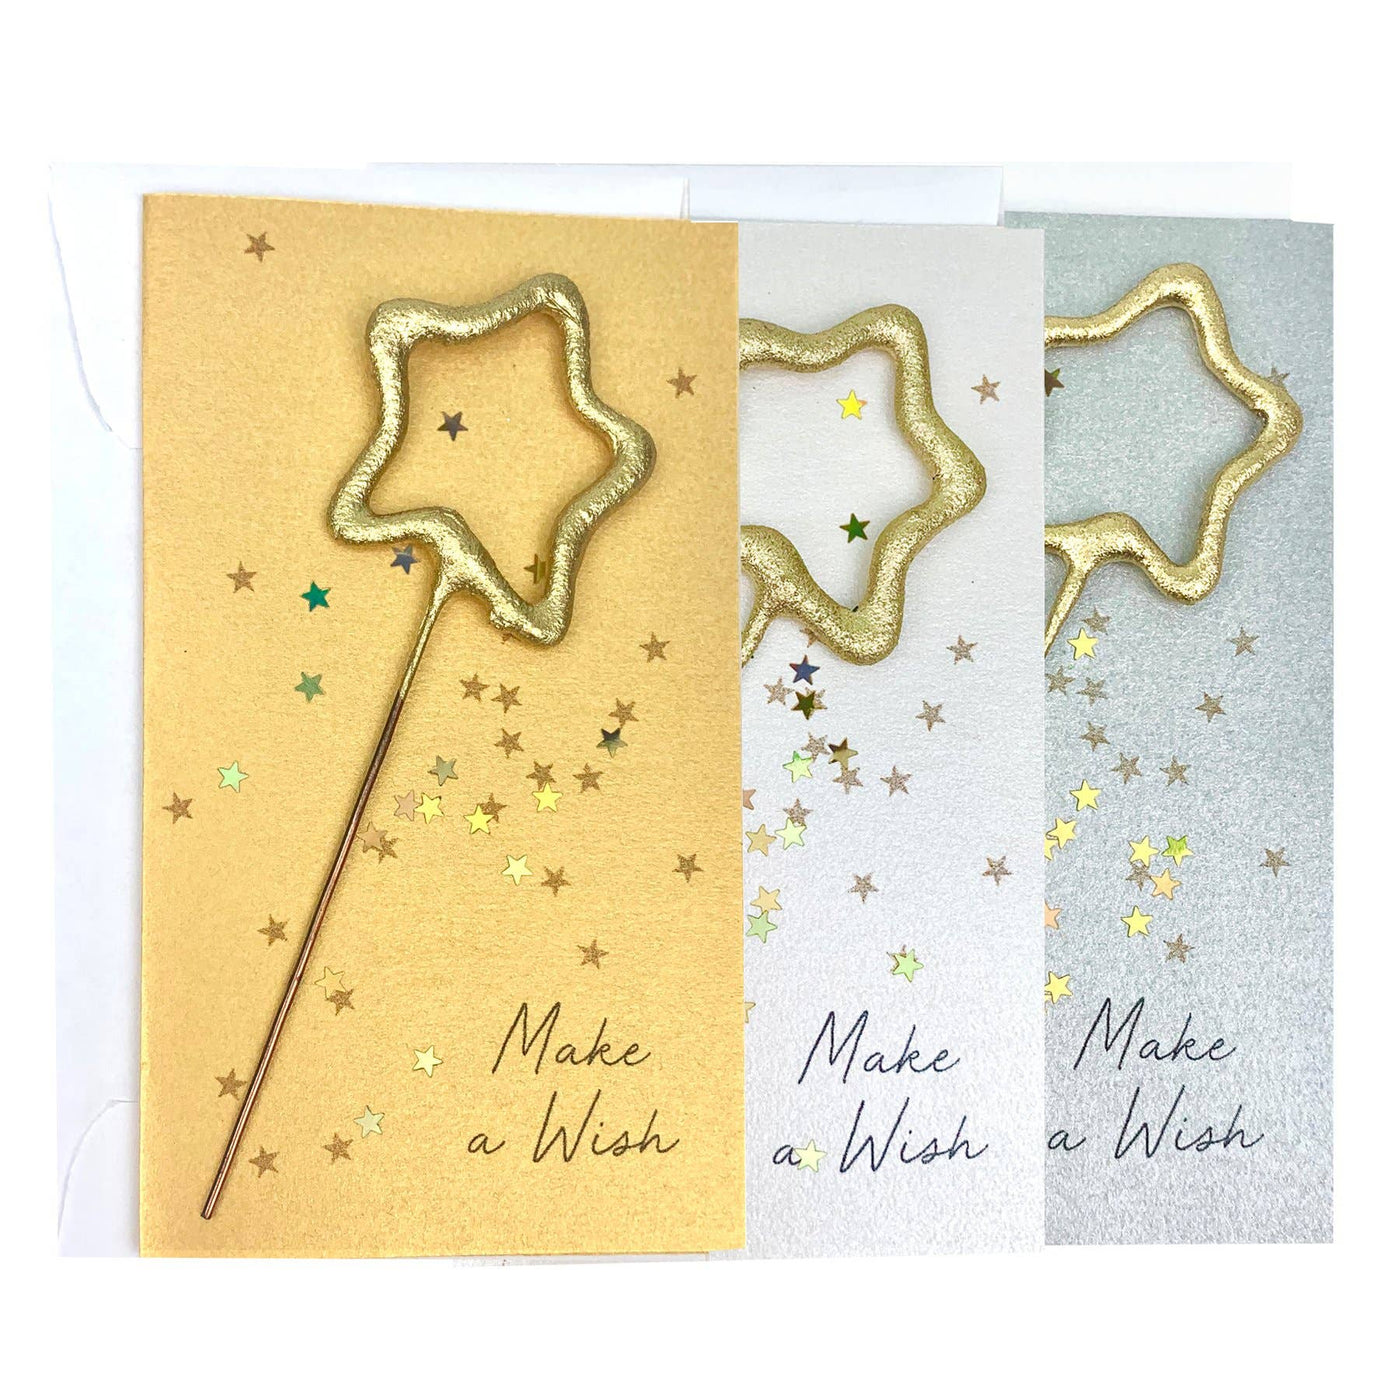 Confetti Sparkler Cards